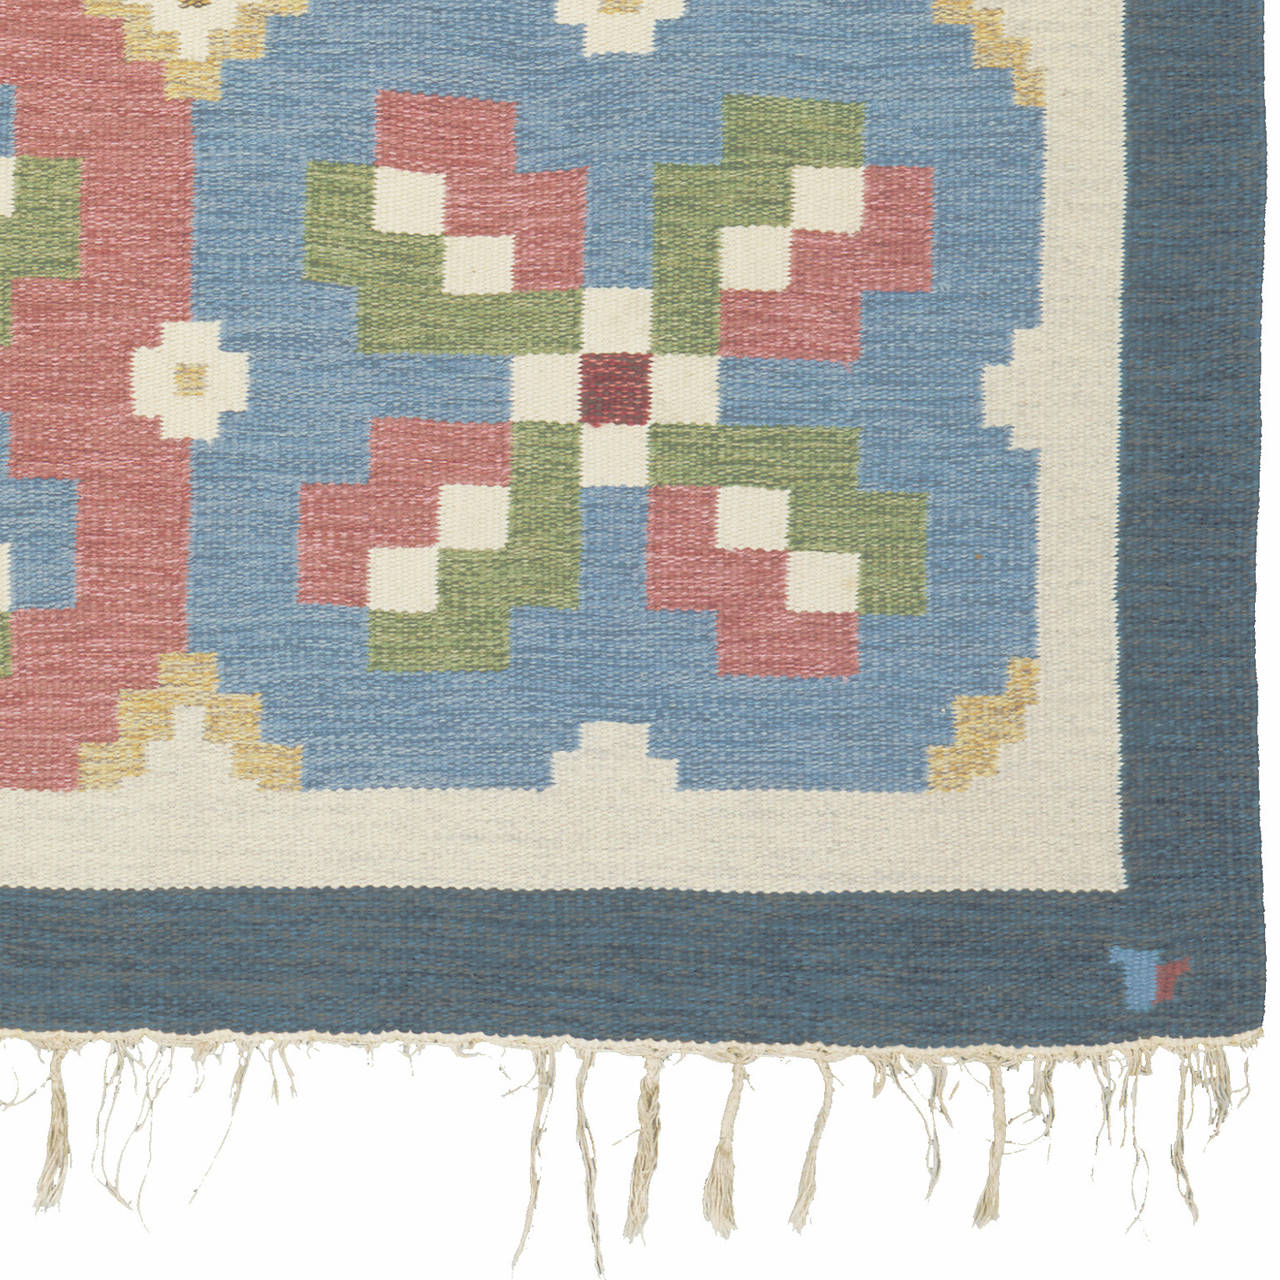 20th Century Swedish Flat-Weave Carpet
Swedish, circa mid-20th century
Flat-weave